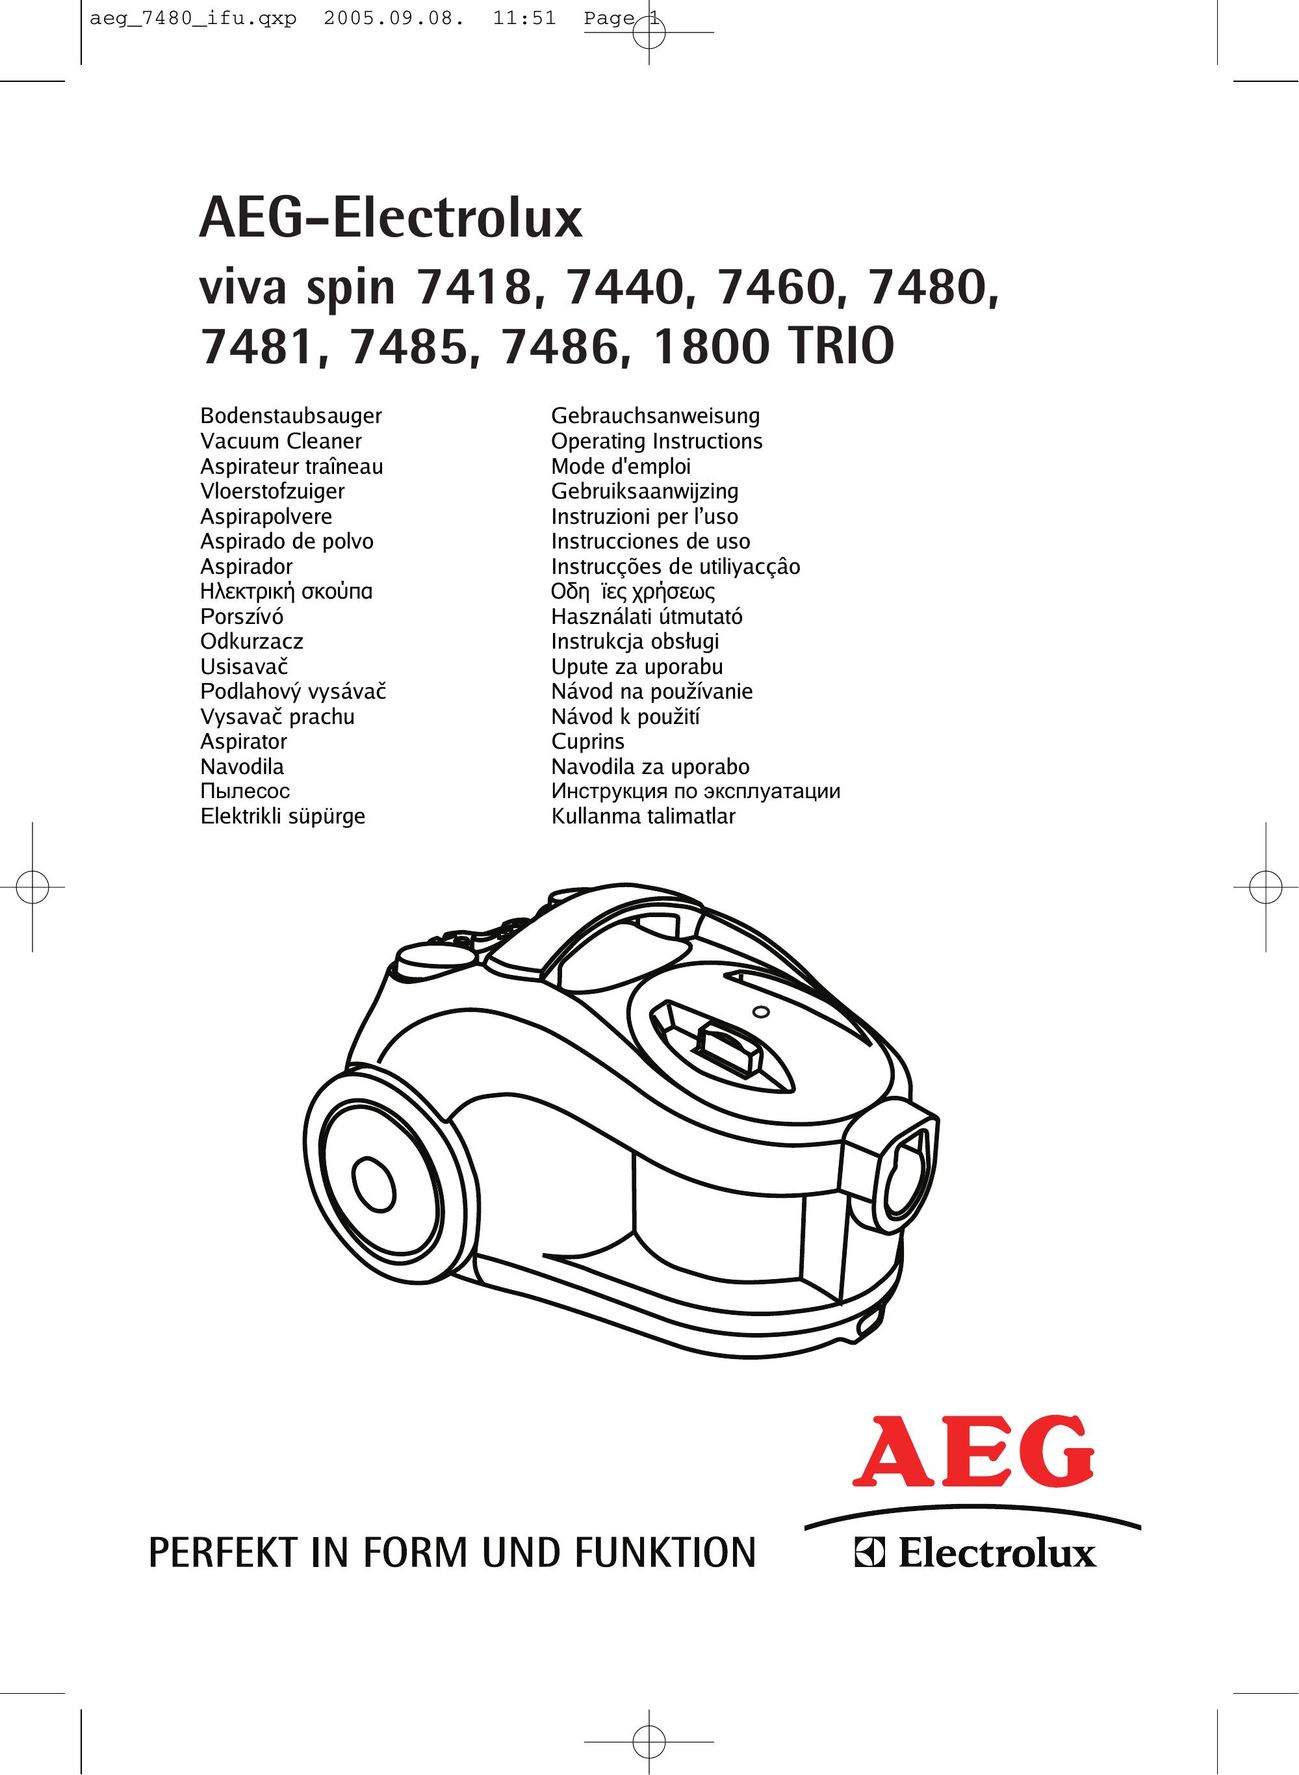 AEG 7440 Vacuum Cleaner User Manual